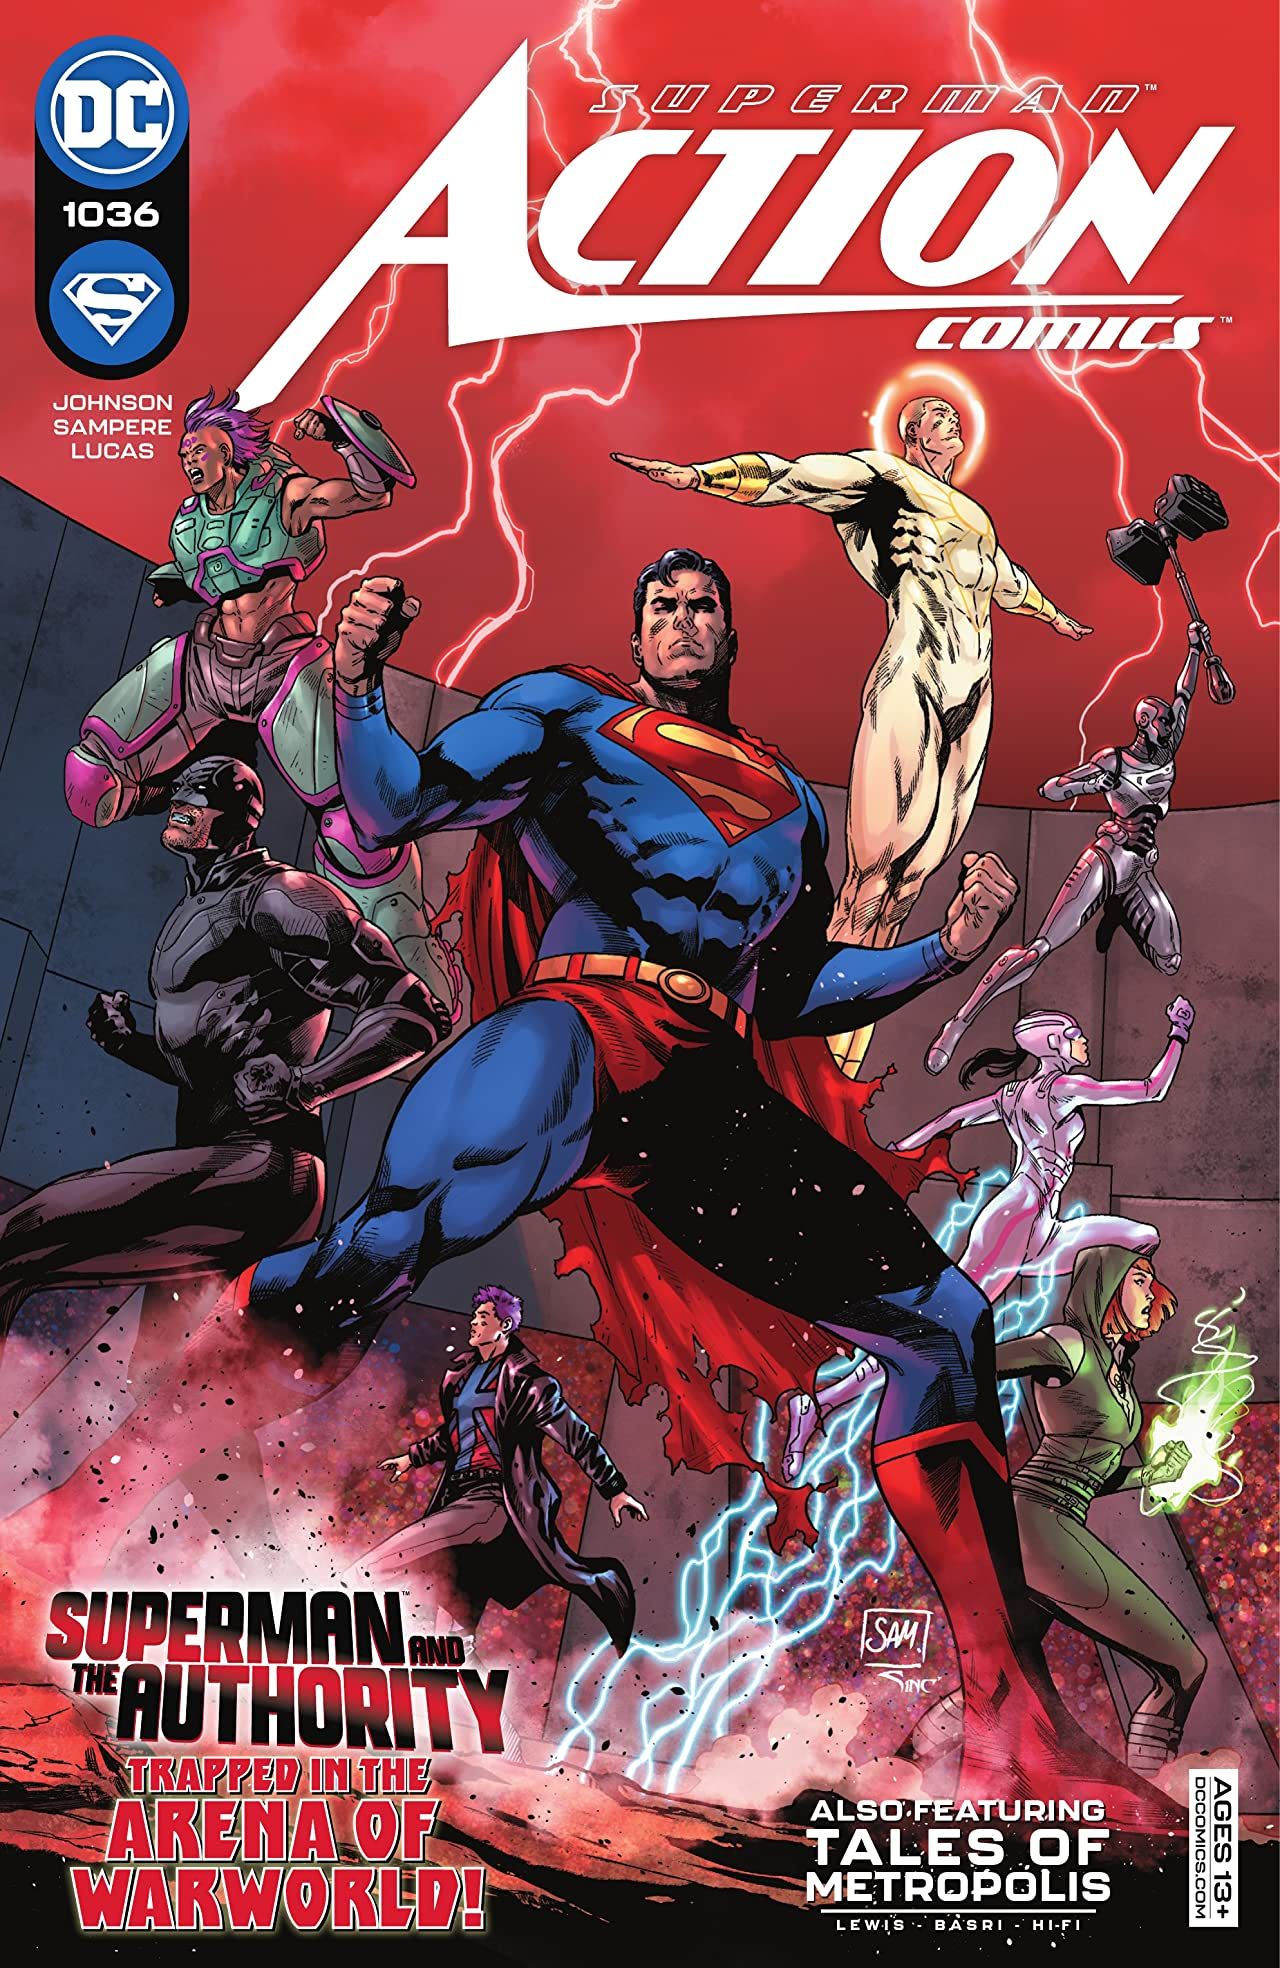 DCs Action Comics #1036 Comic Review